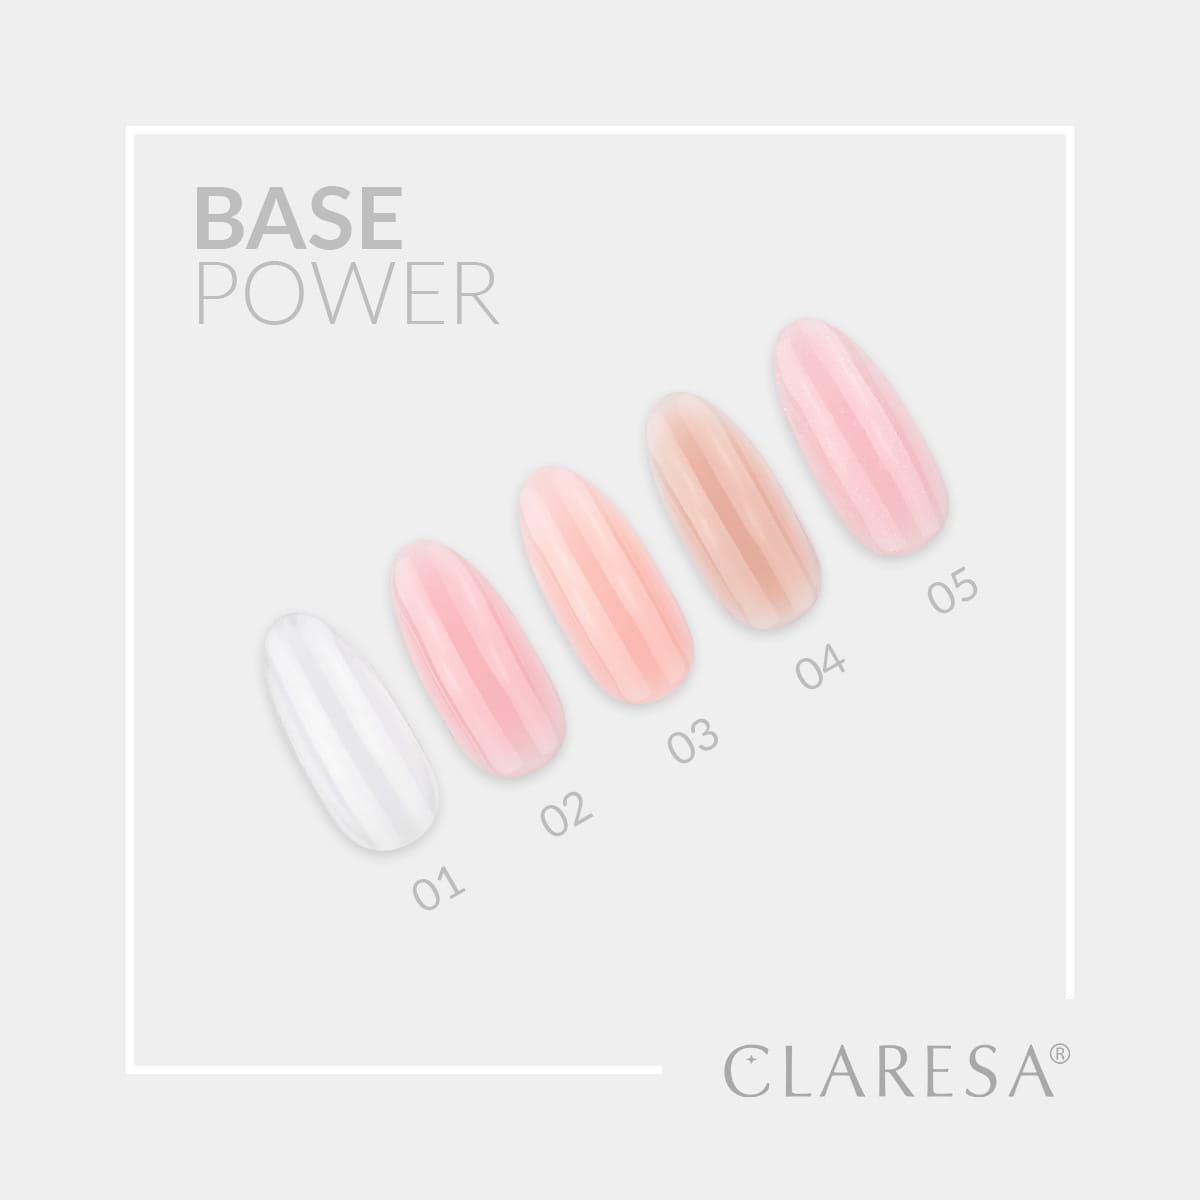 Claresa-Power-Base_ae8c81e5-6760-4f28-92dc-309e45f2d242.jpg